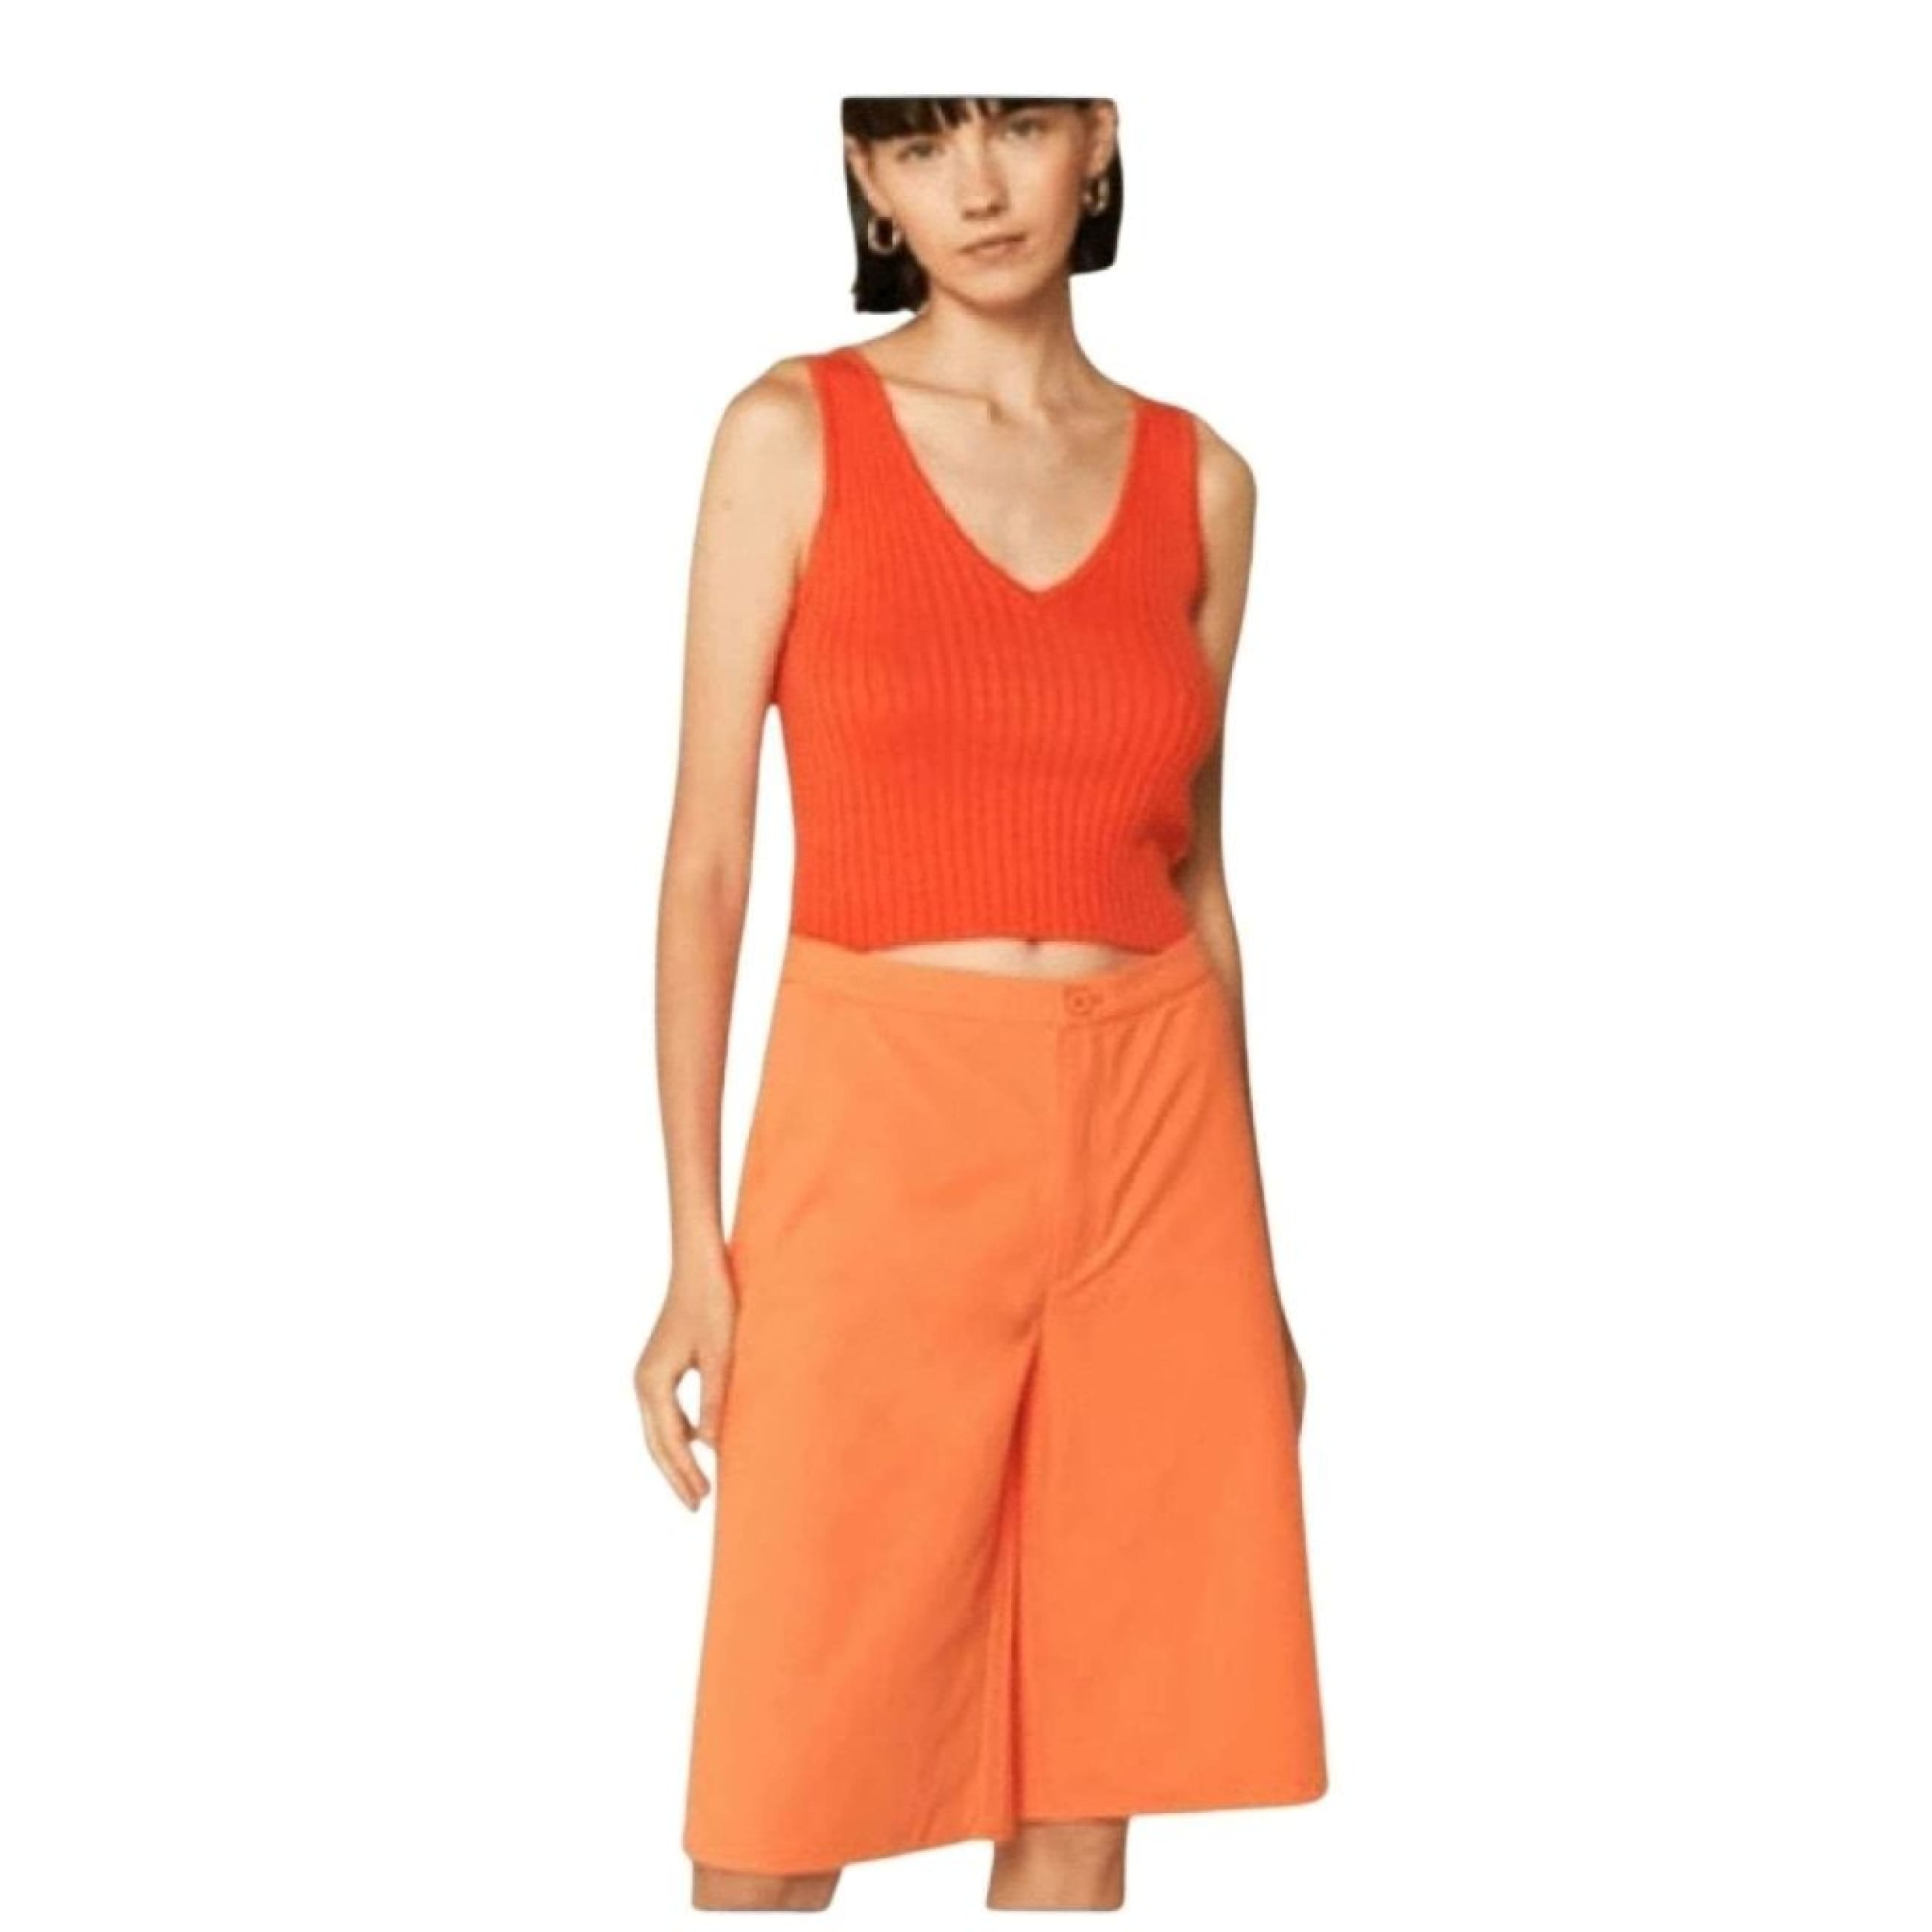 Compania Fantastica Orange Knit Tank - Shirts & Tops